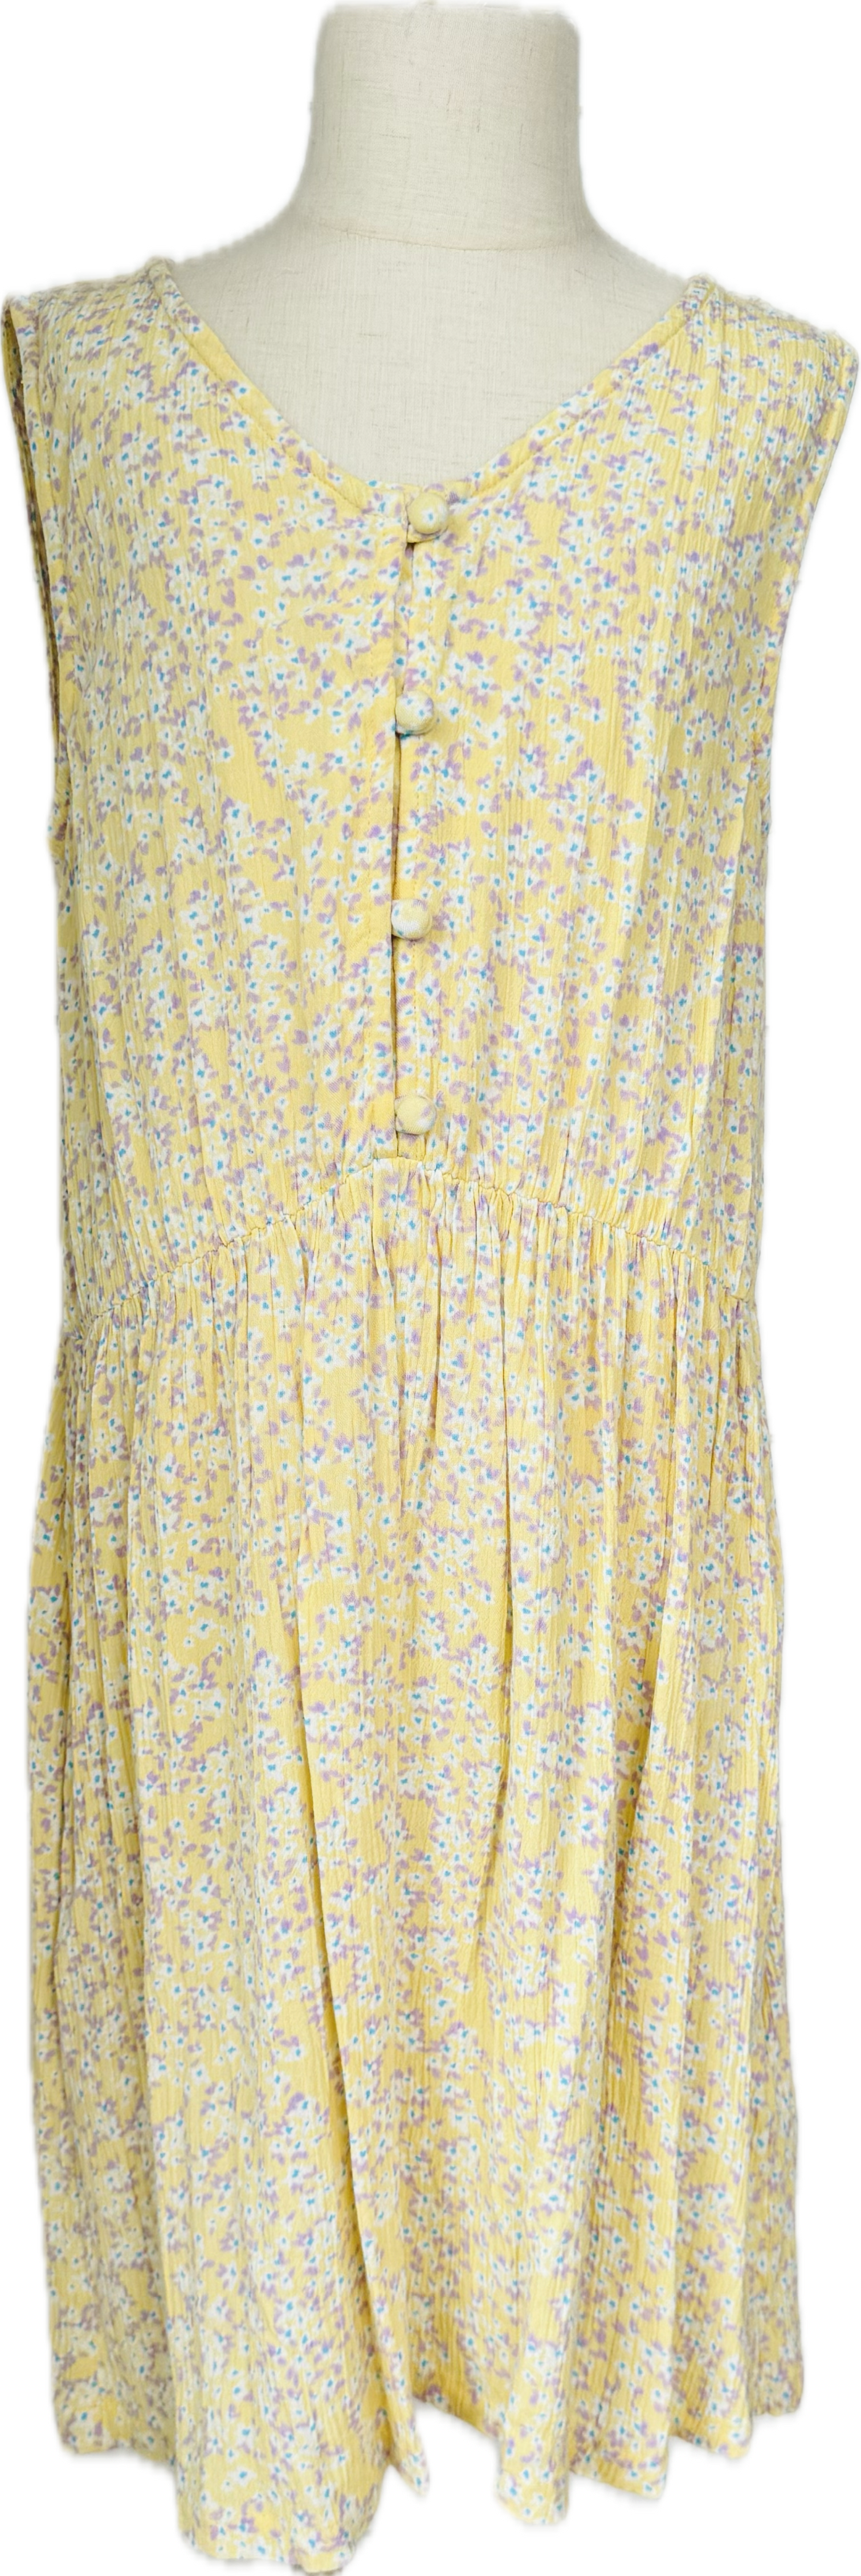 Roxy Girls Floral Dress, Yellow Girls Size 12